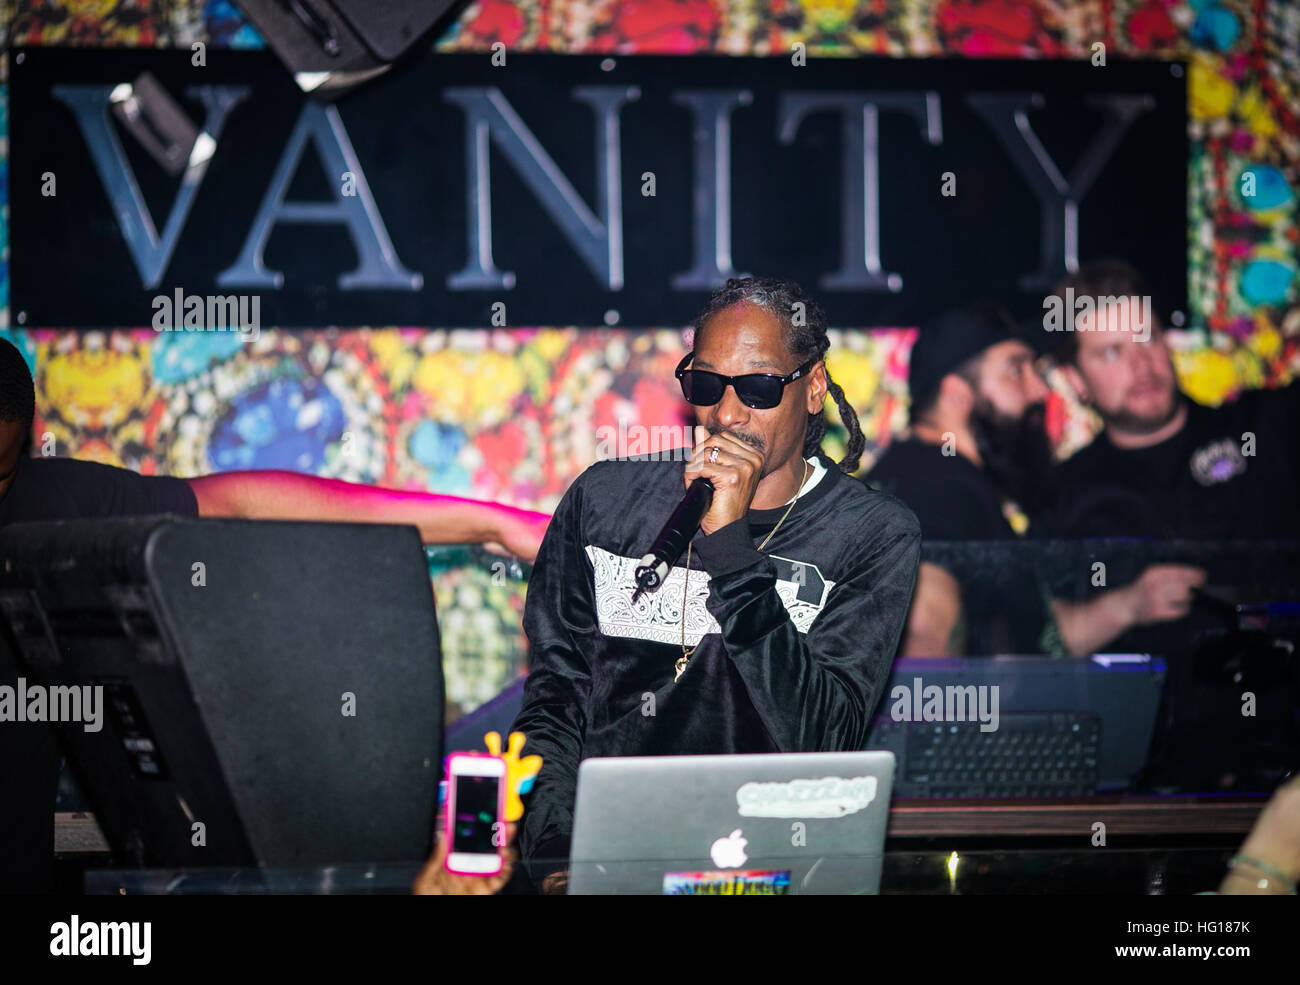 LAS VEGAS, NV - December 30, 2016: ***HOUSE COVERAGE*** Snoop Dogg DJ set at Vanity Nightclub at Hard Rock Hotel & Casino in Las vegas, NV on December 30, 2016. Credit: GDP Photos/ MediaPunch Stock Photo